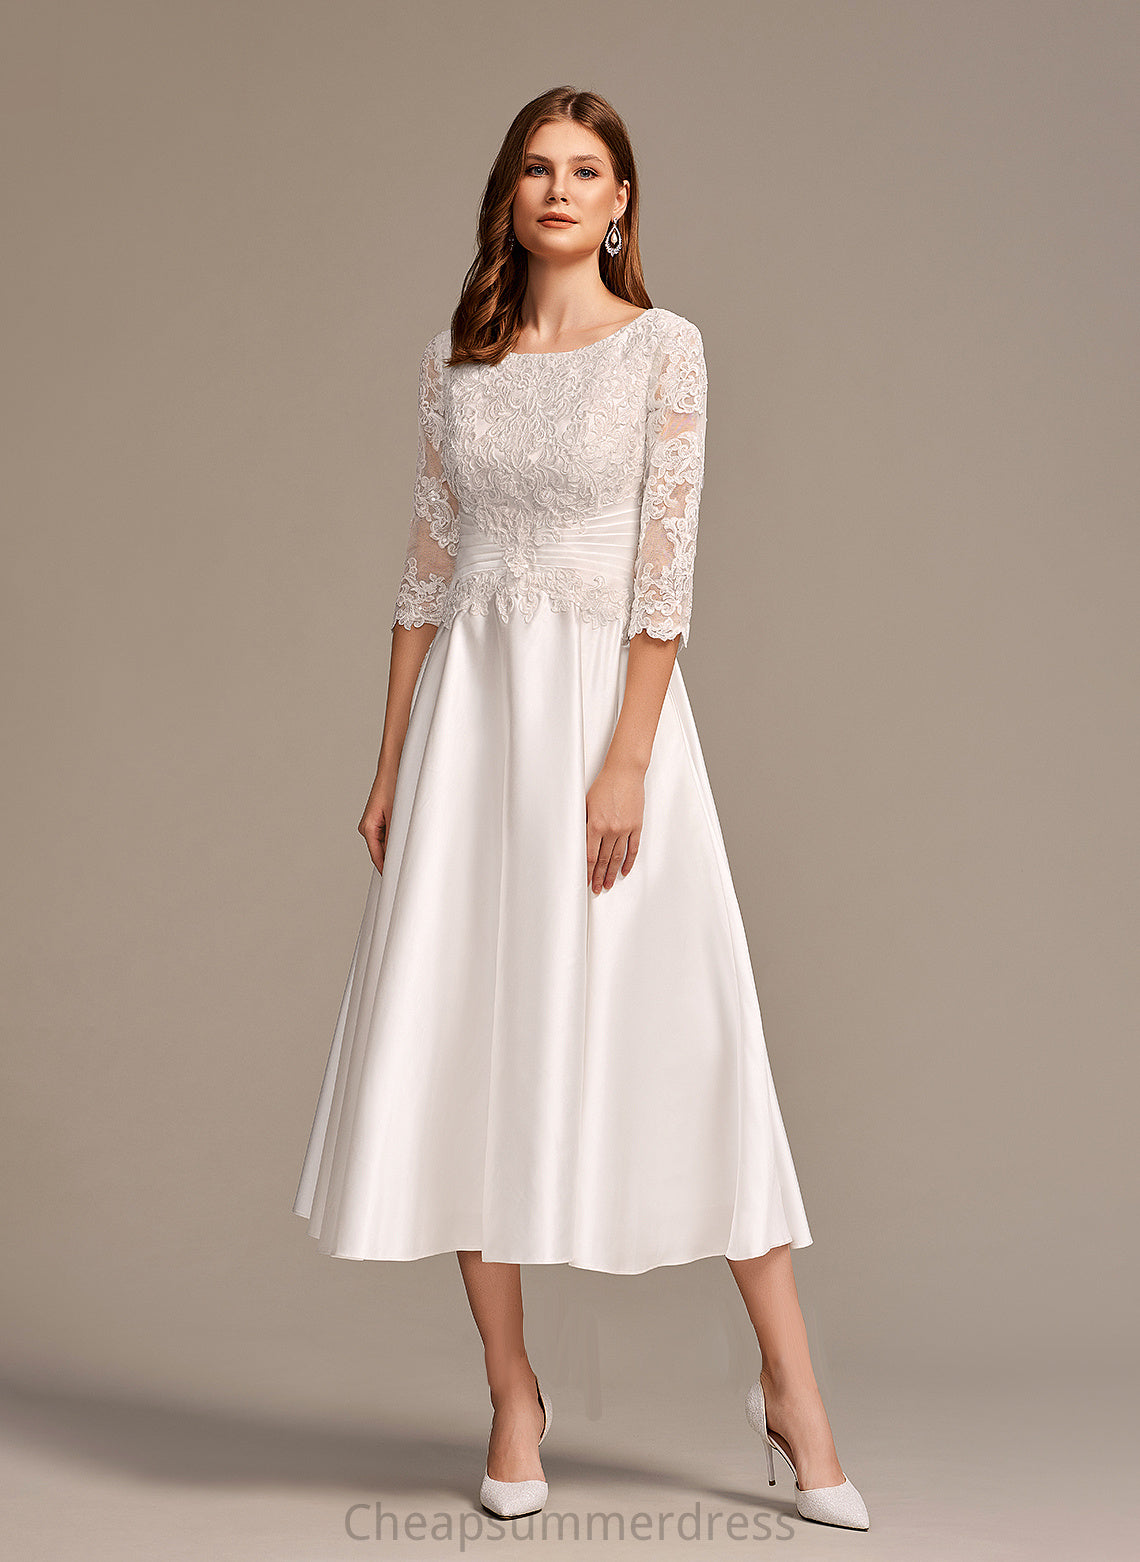 Wedding Dresses With Arianna Wedding Scoop Dress Neck Tea-Length Pockets A-Line